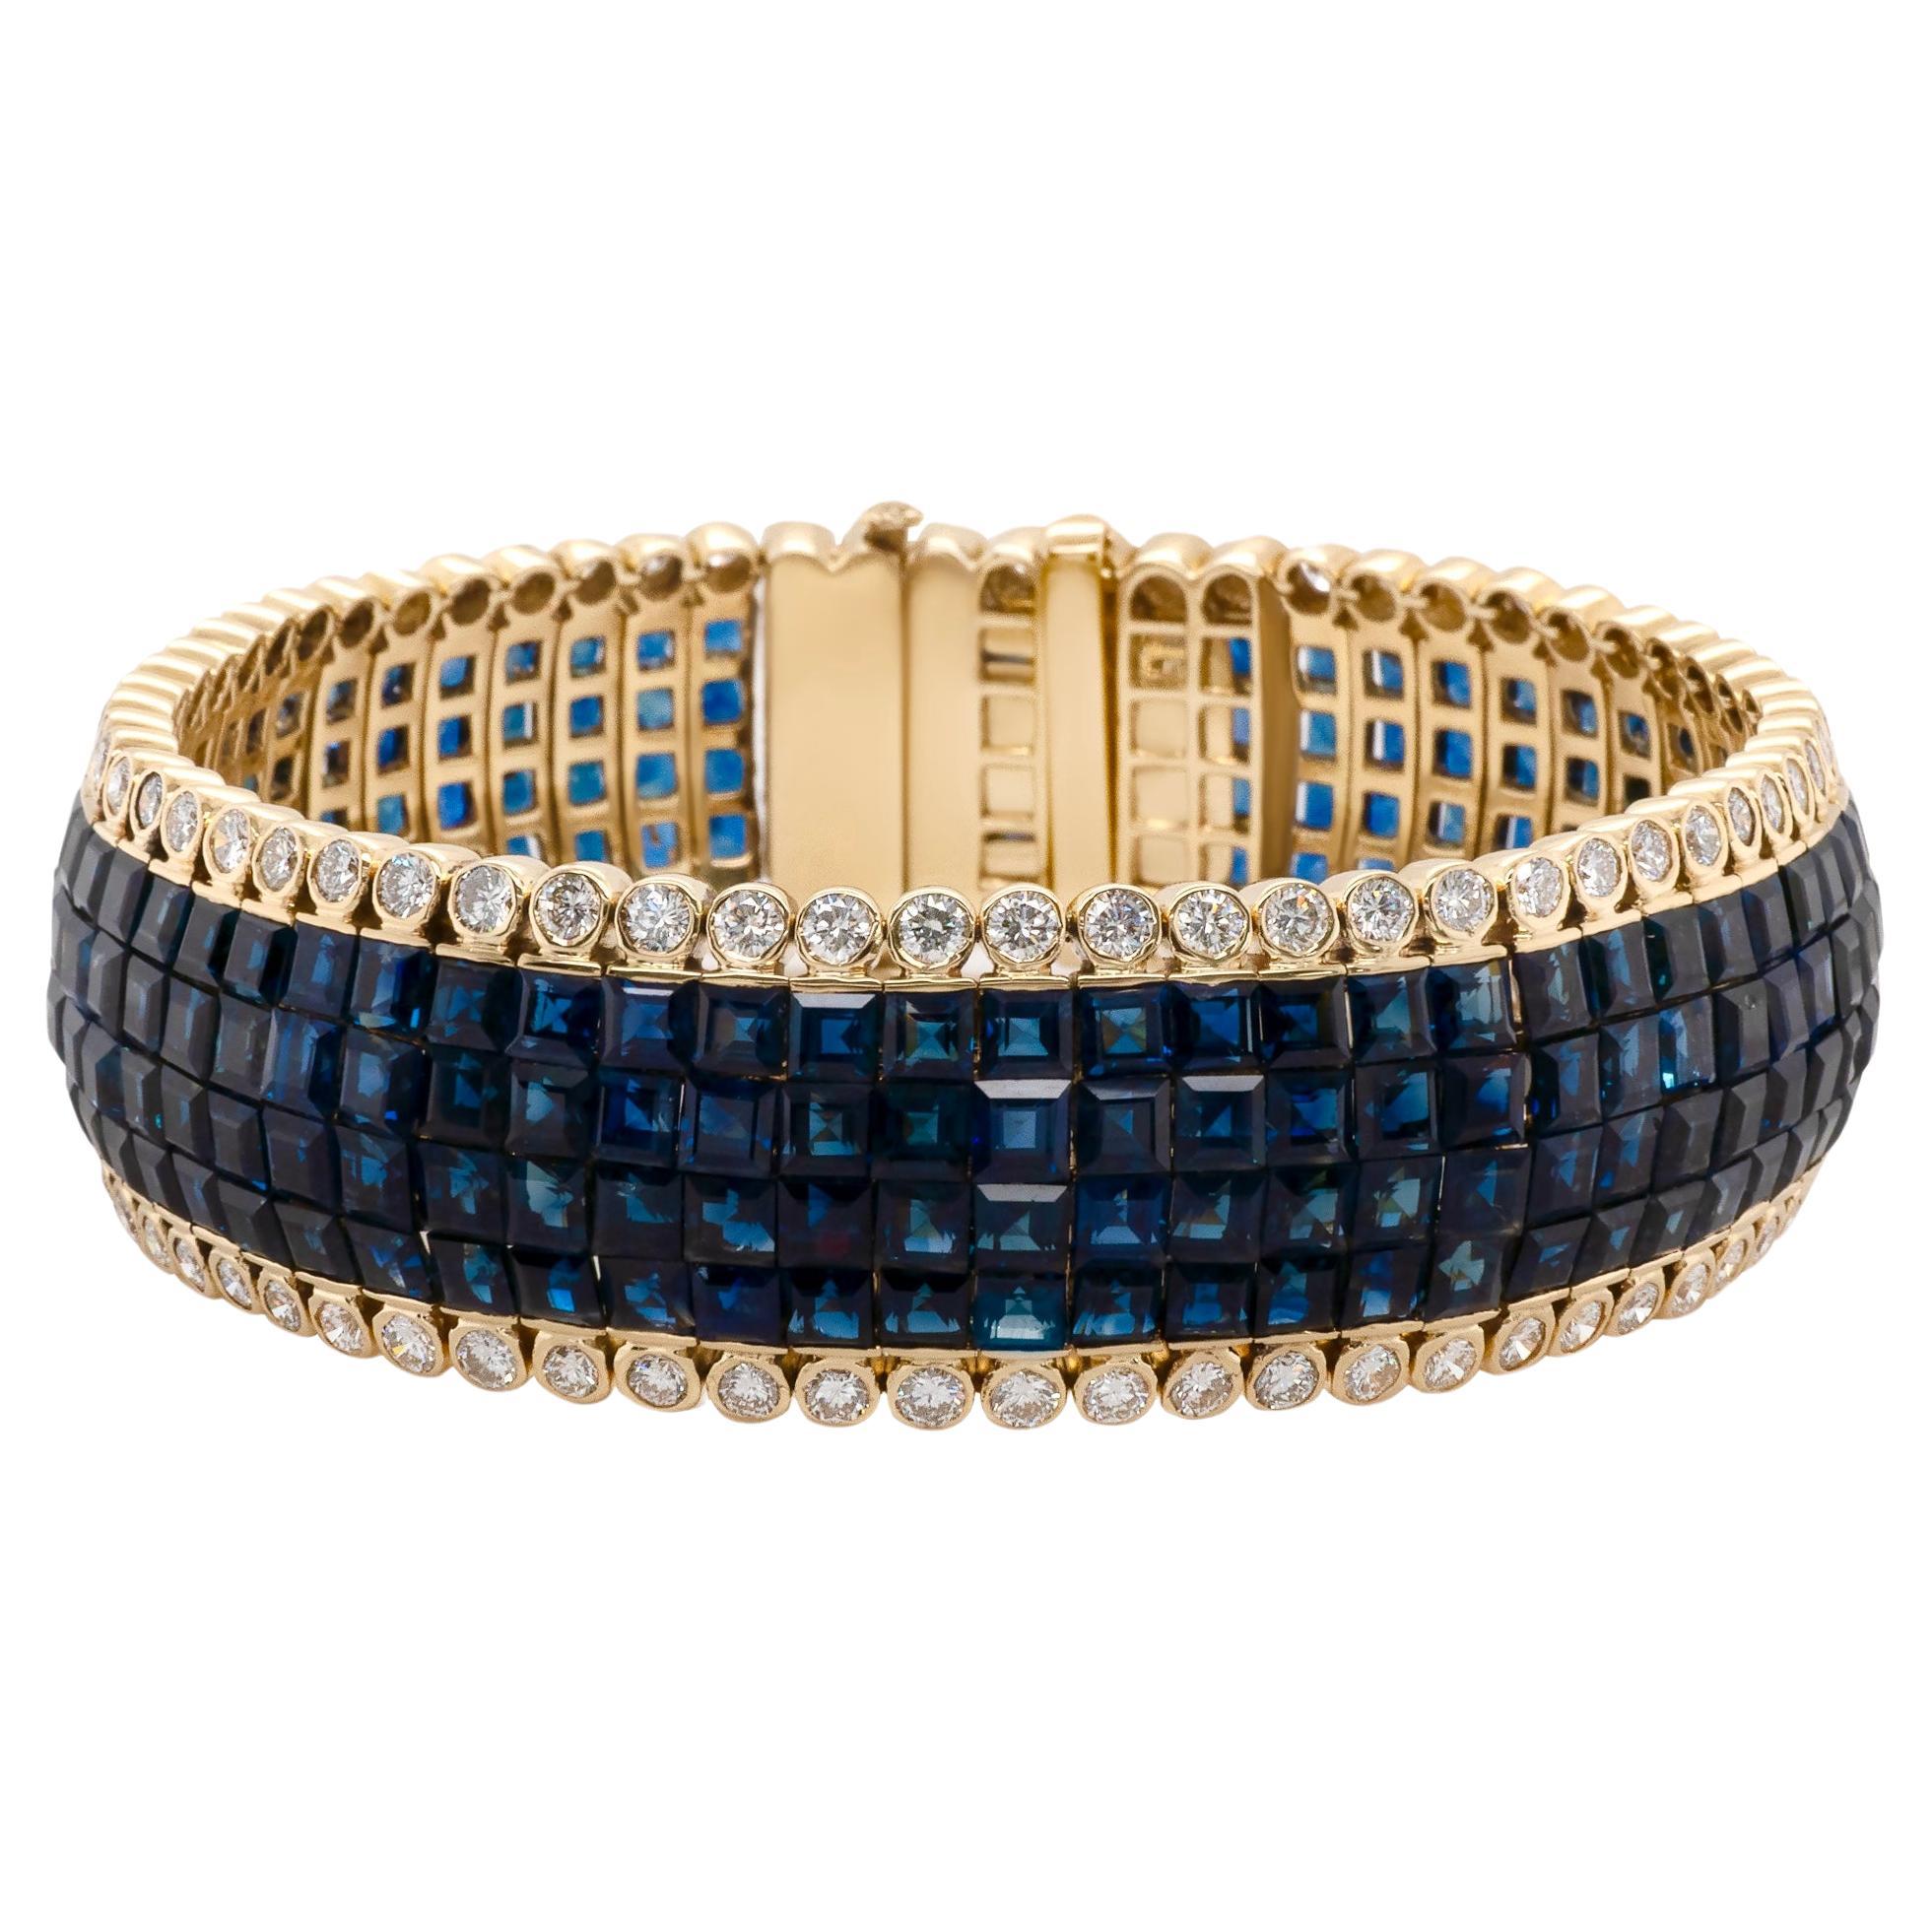 39.62 Carat Blue Sapphire and 6.2 Carat Diamond Bracelet in 18 Karat Yellow Gold For Sale